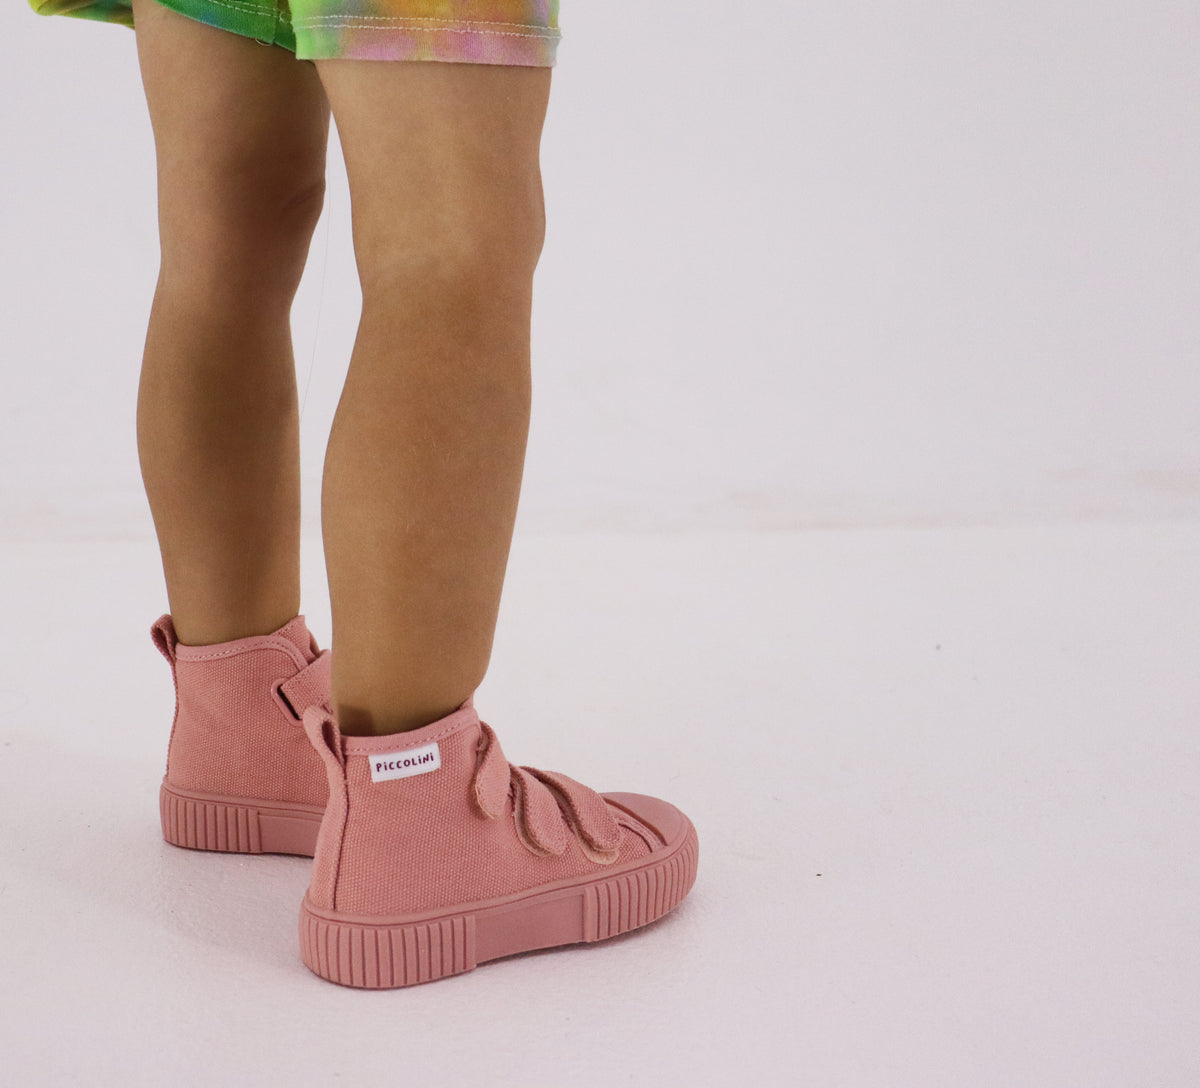 piccolini original high top sneaker - pink